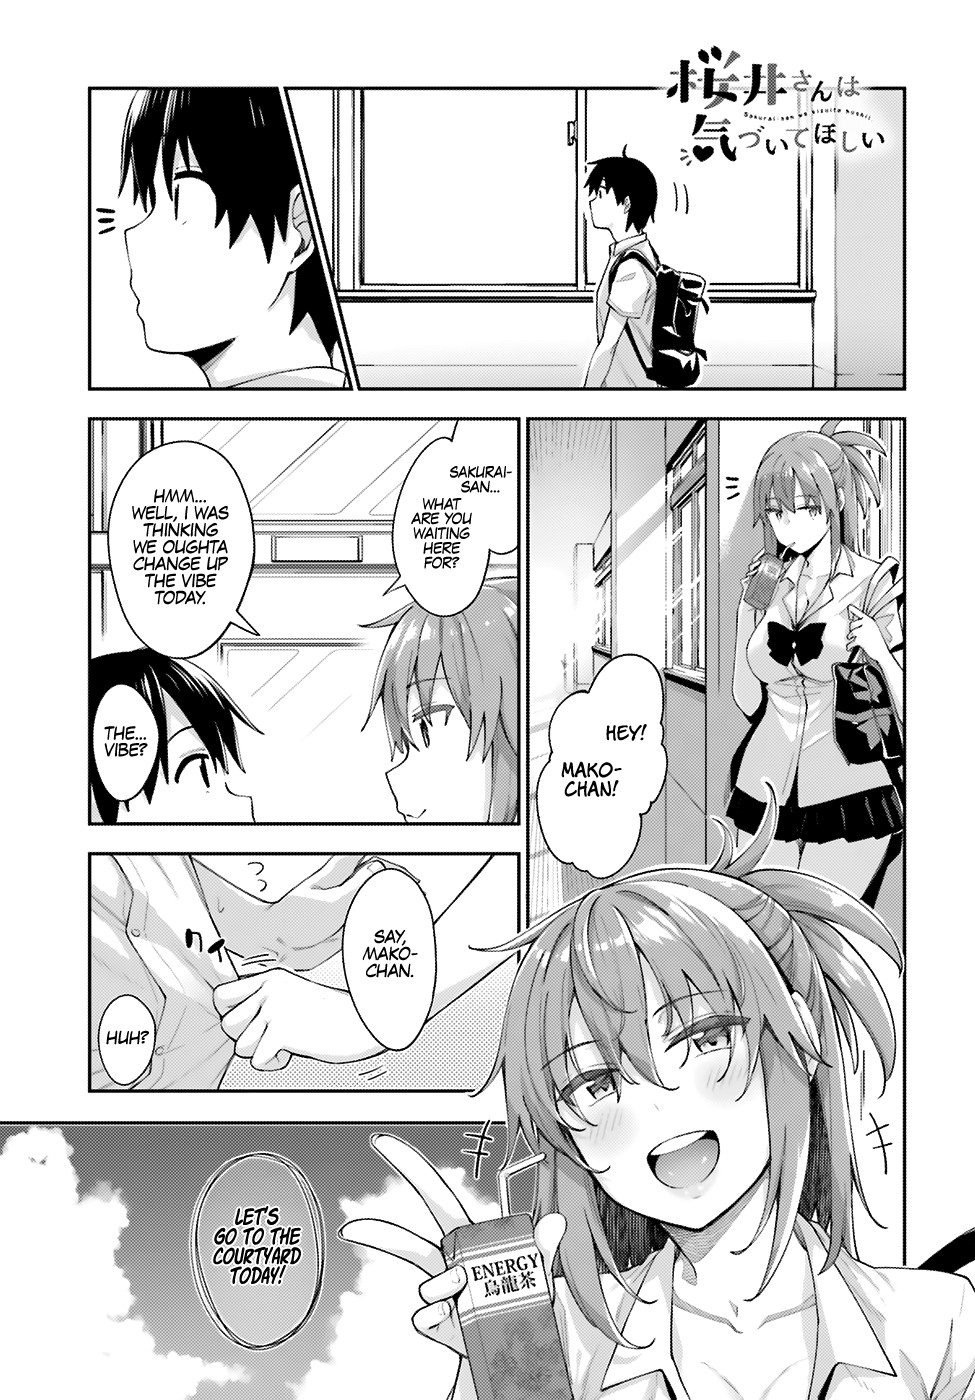 Sakurai-San Wants To Be Noticed - Page 1